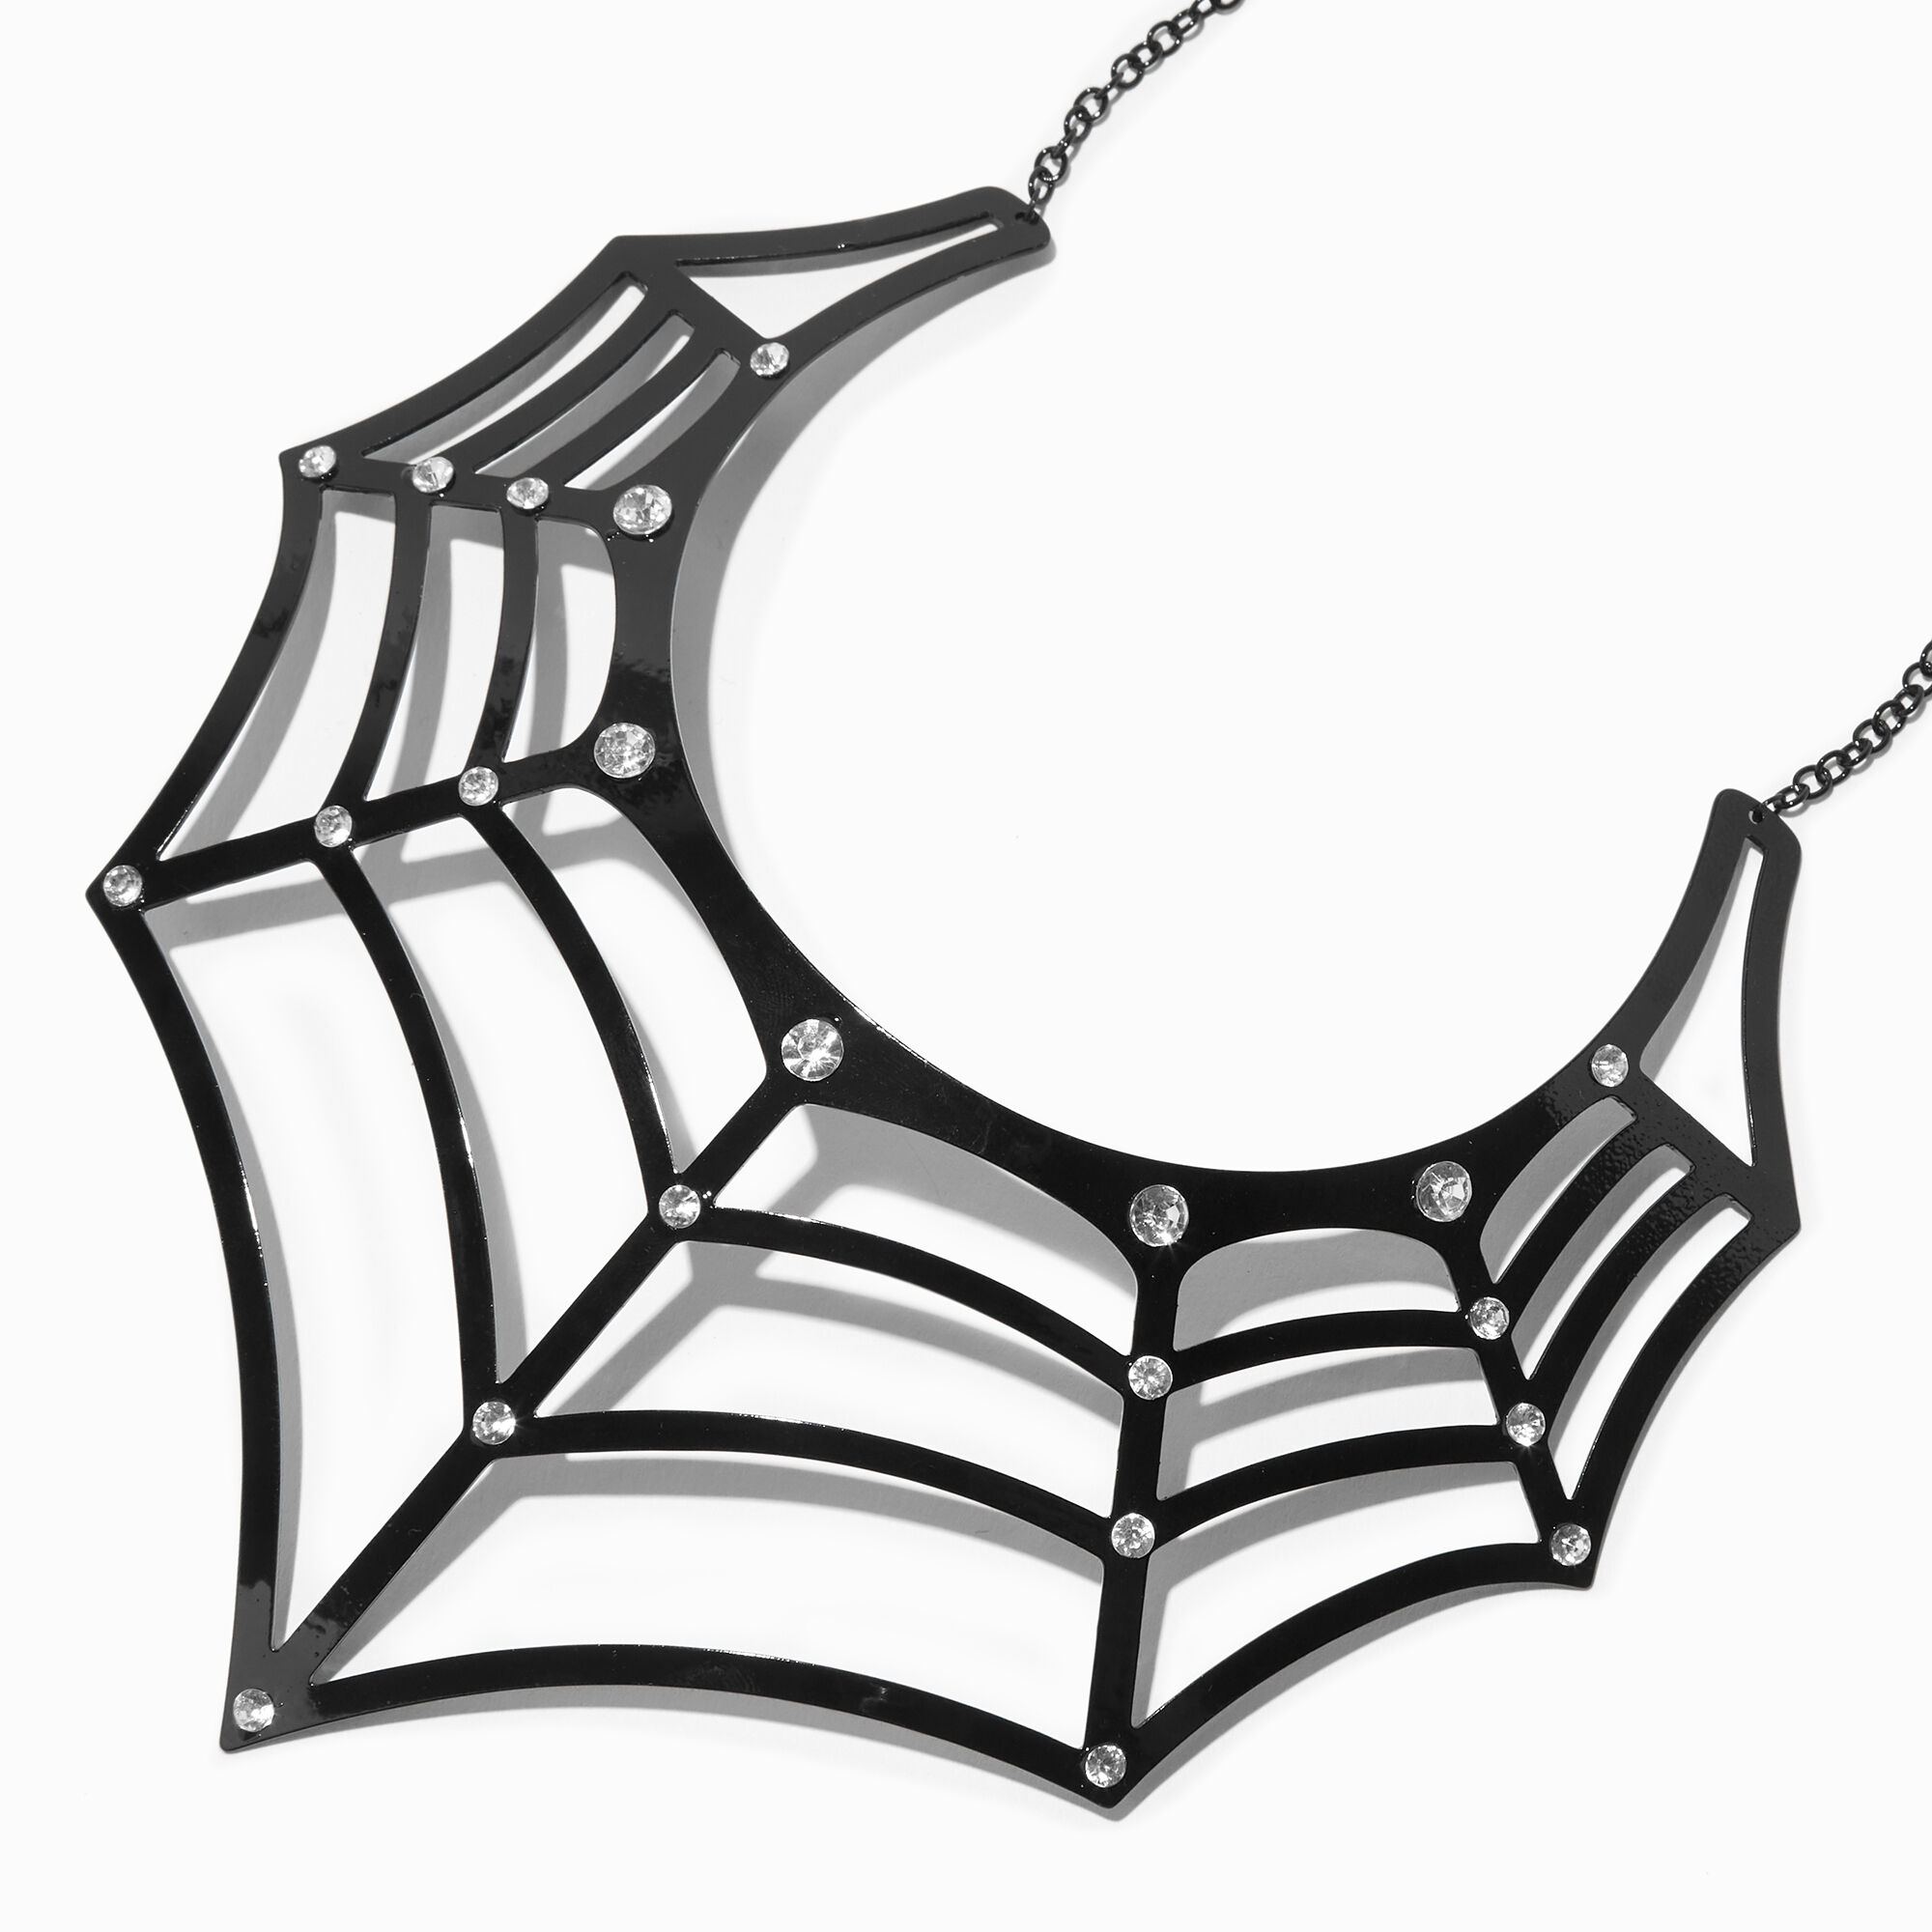 View Claires Embellished Spider Web Necklace Black information